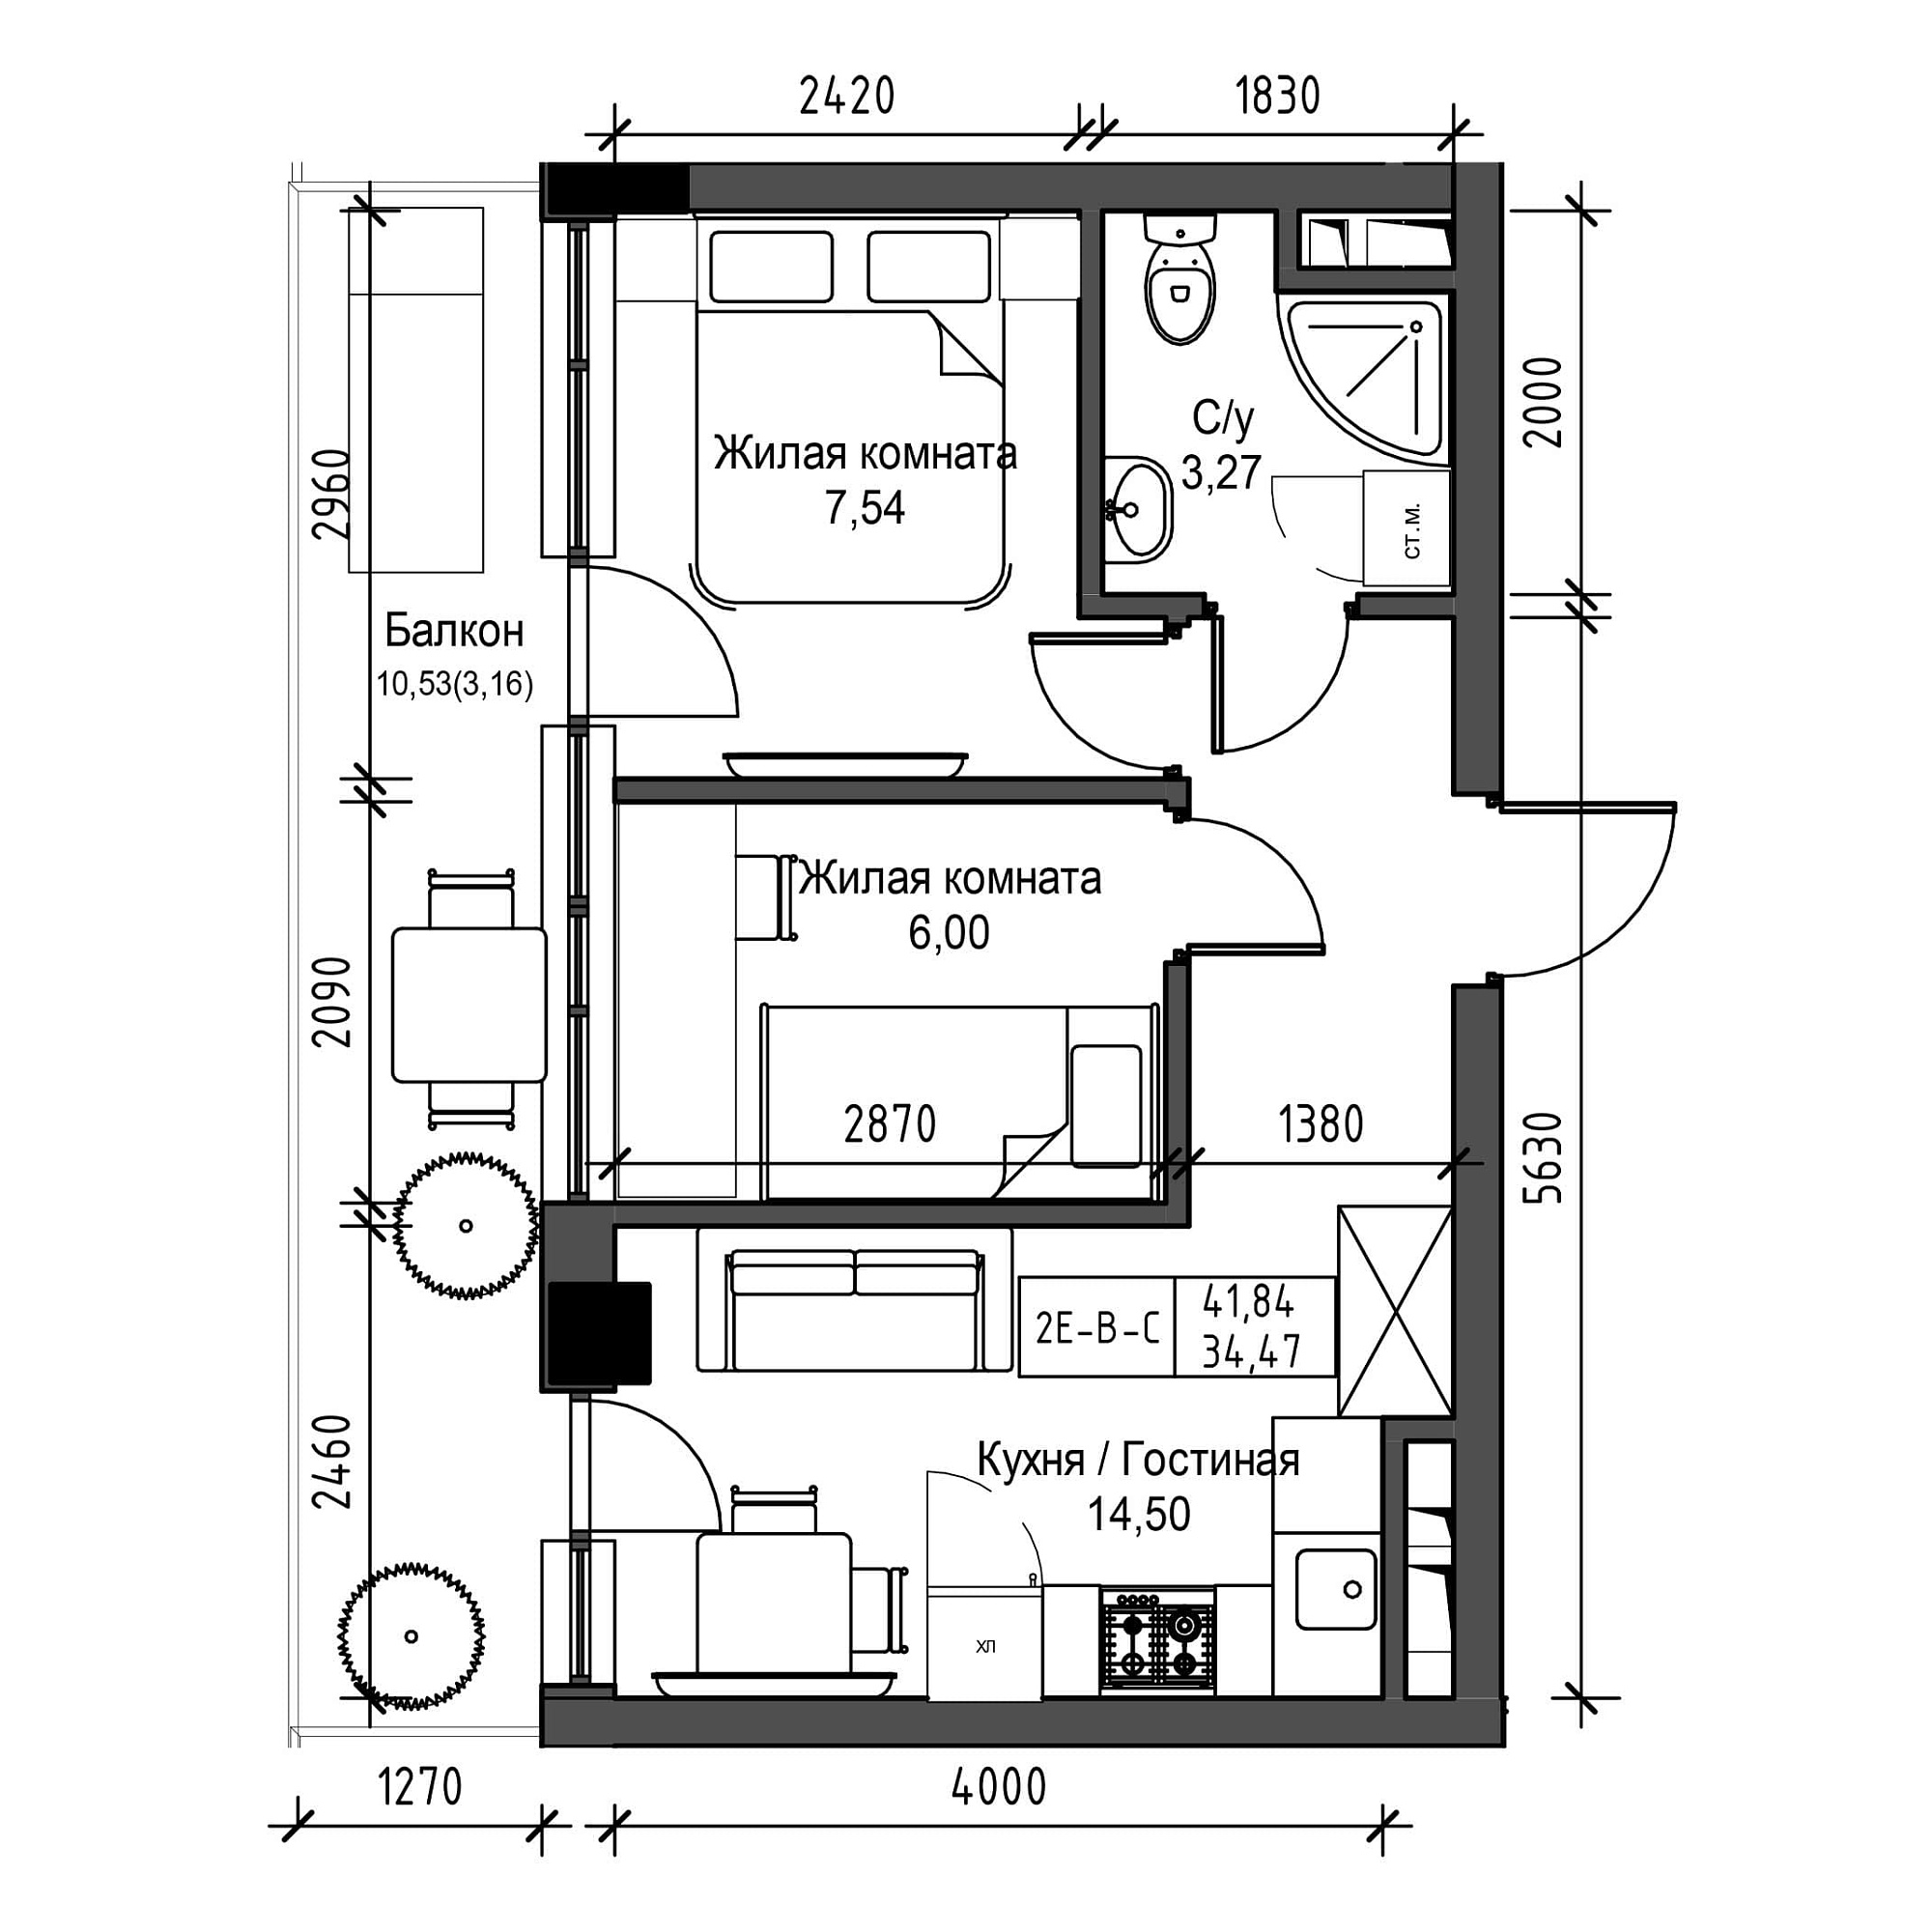 Планування 2-к квартира площею 34.47м2, UM-001-08/0012.